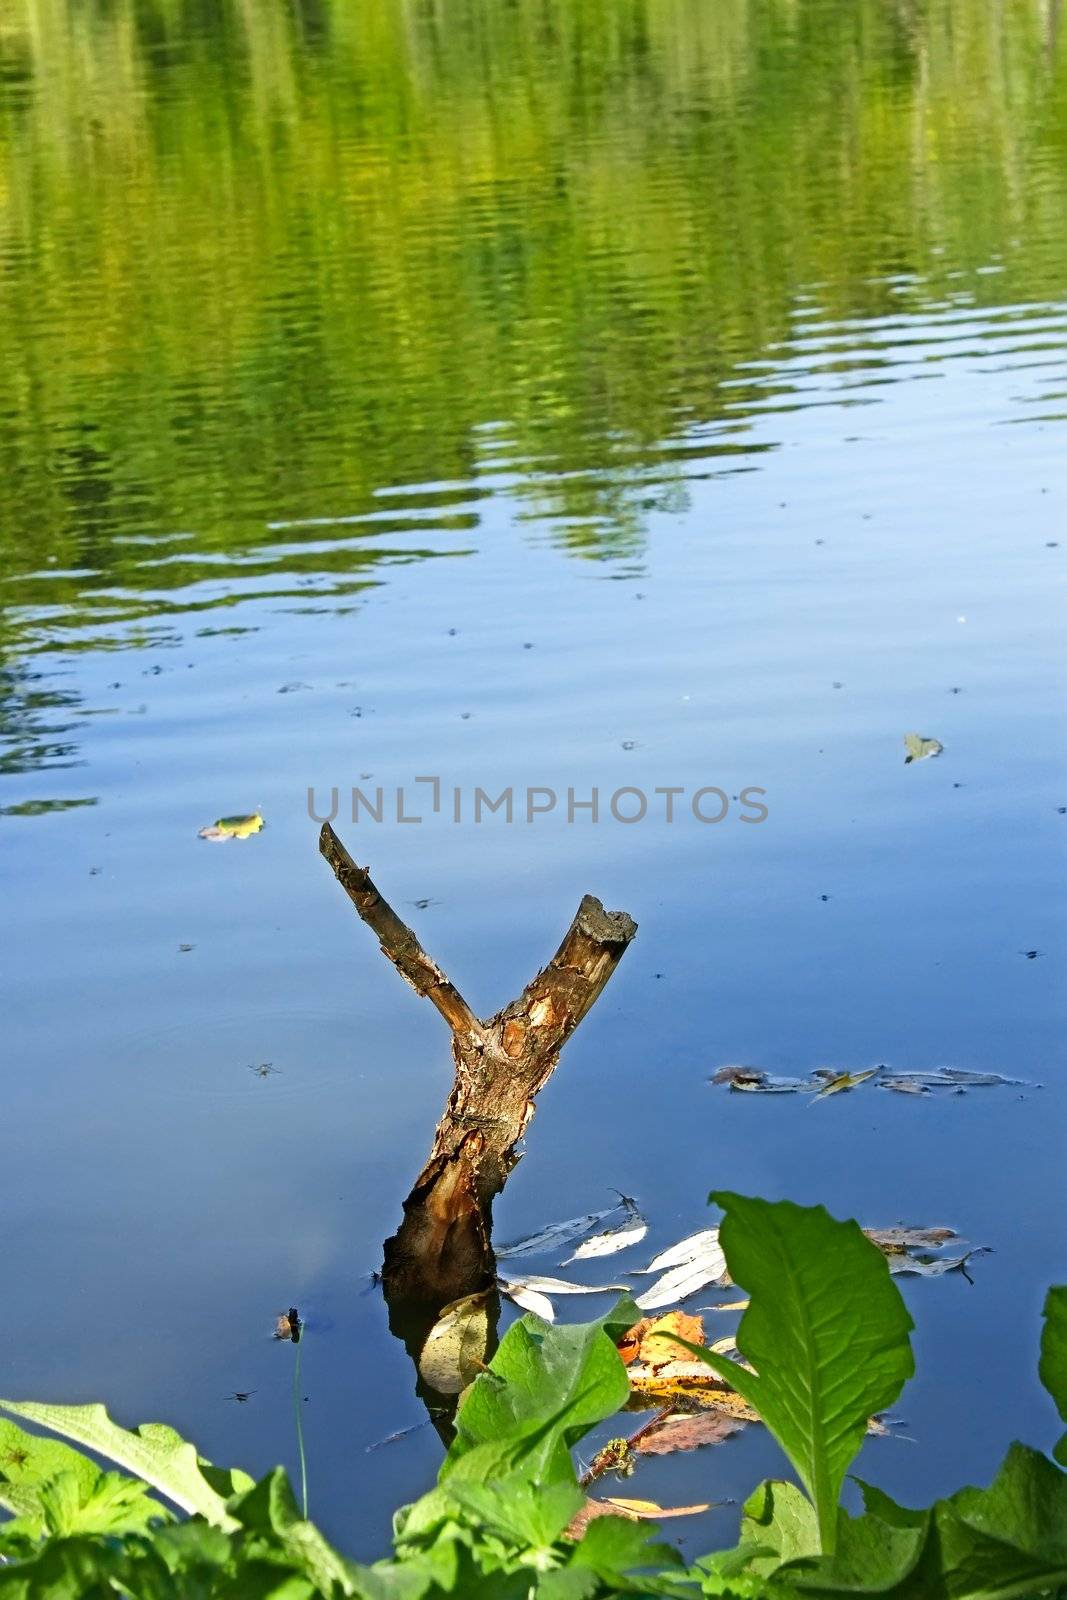 Wooden slingshot in water by qiiip